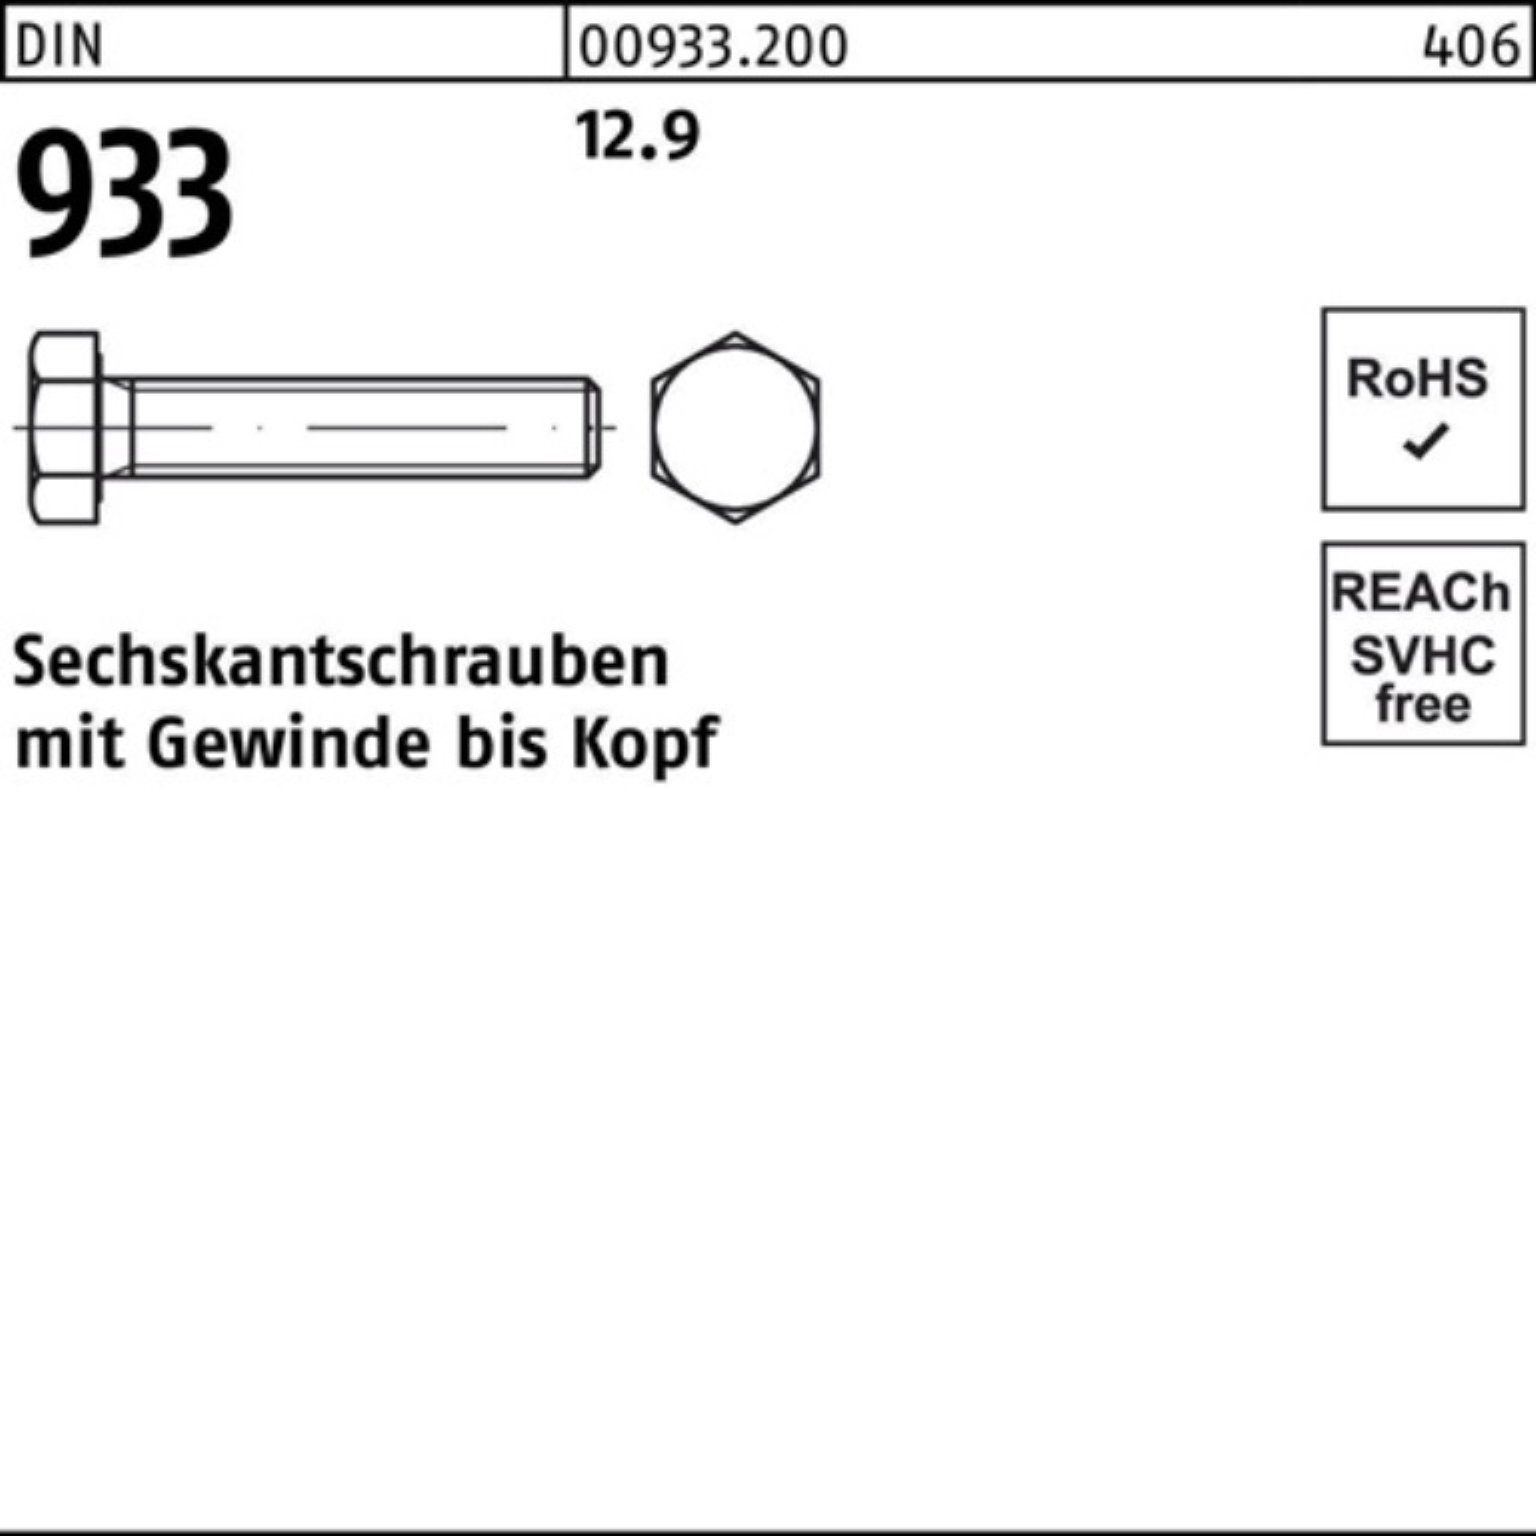 Reyher Sechskantschraube M8x 200 60 Pack DIN Stück VG 933 12.9 200er 933 DIN Sechskantschraube